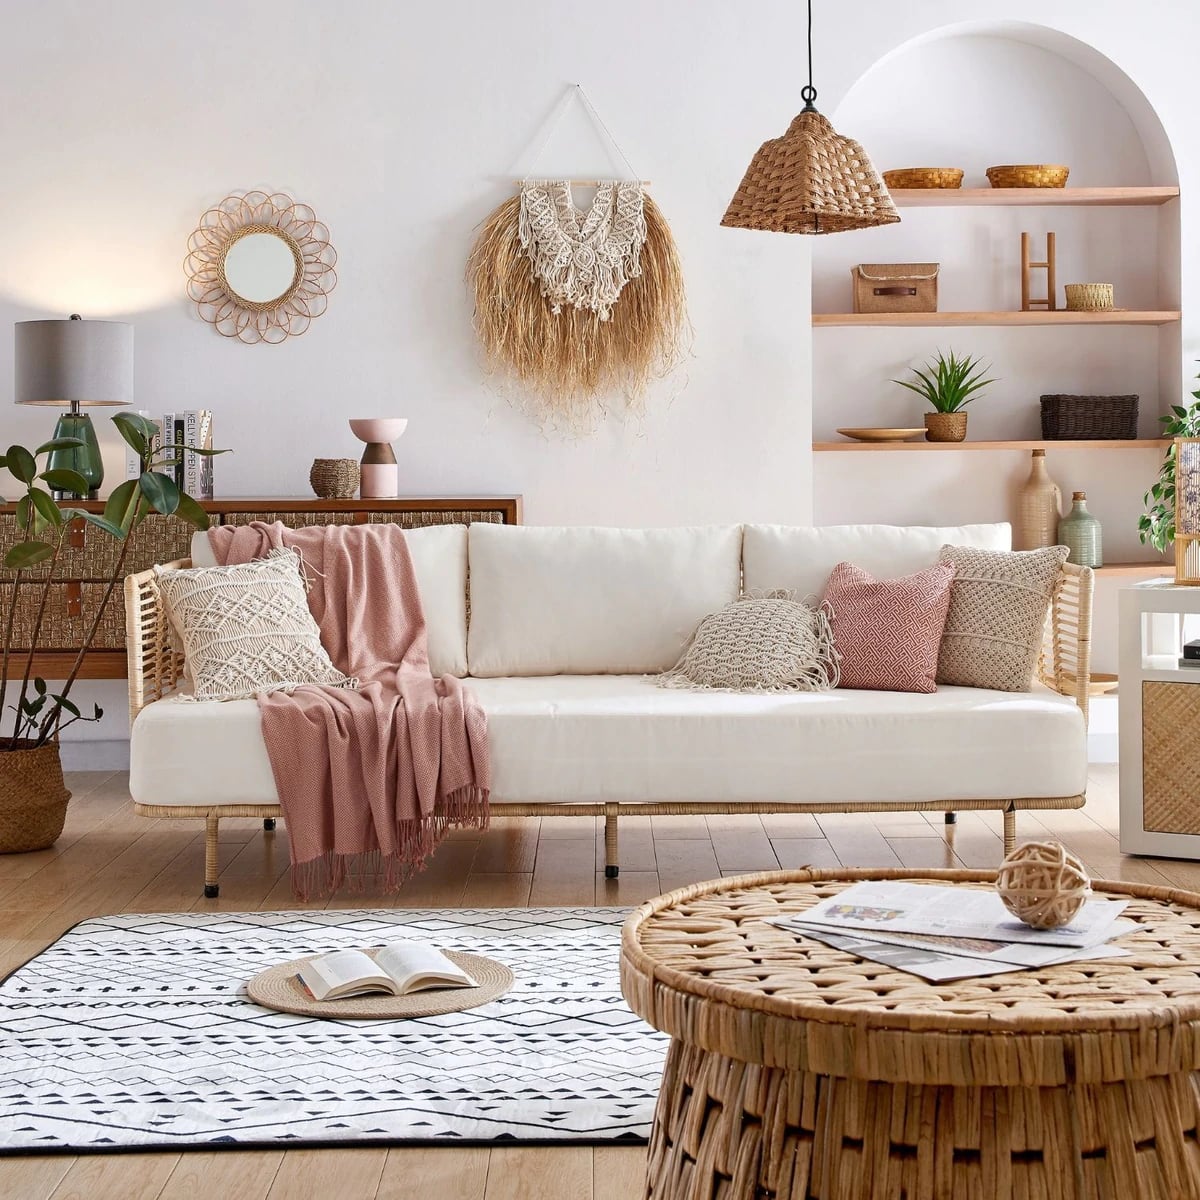 Boho chic furniture: ideas for a perfect bohemian home - Rebecca Mobili